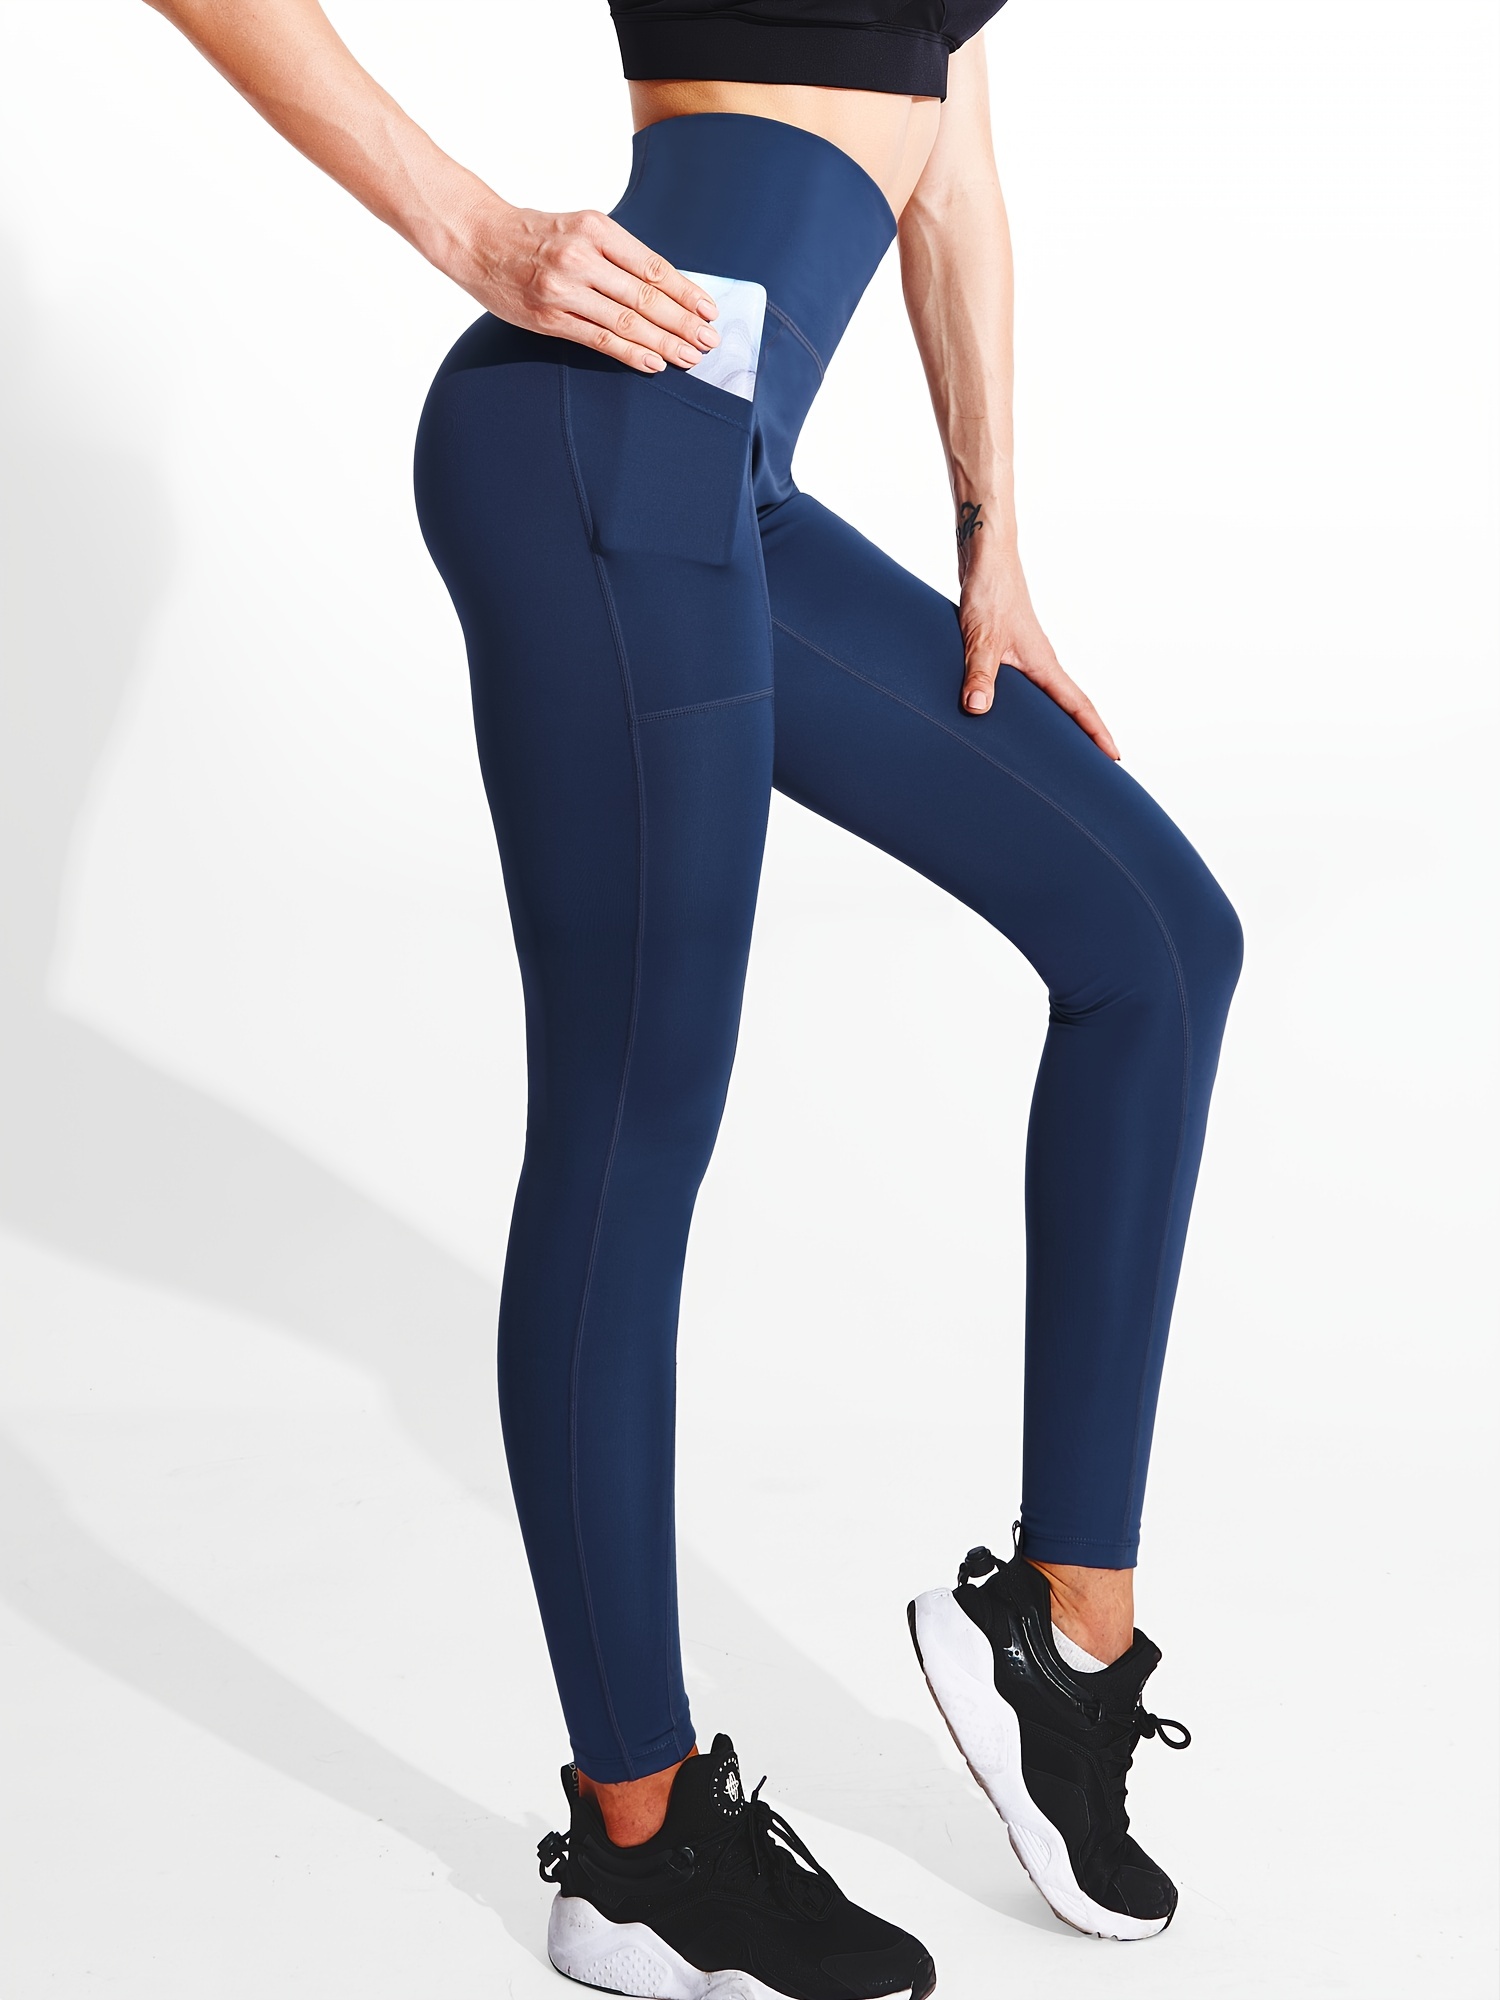 Women's High Waist Yoga Pants 7/8 Length Leggings with Pockets